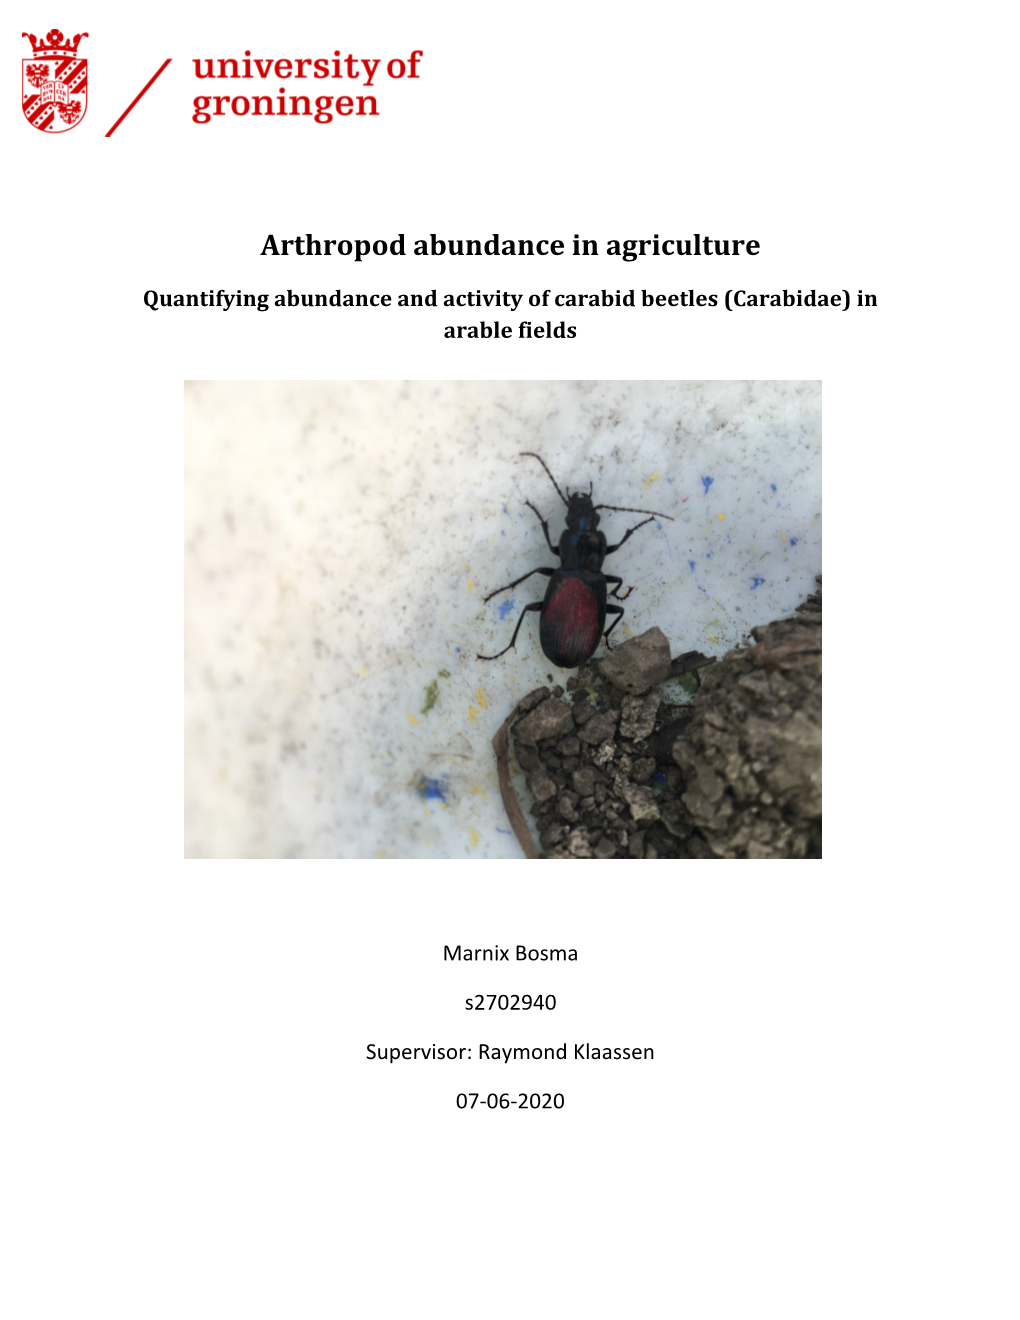 Arthropod Abundance in Agriculture